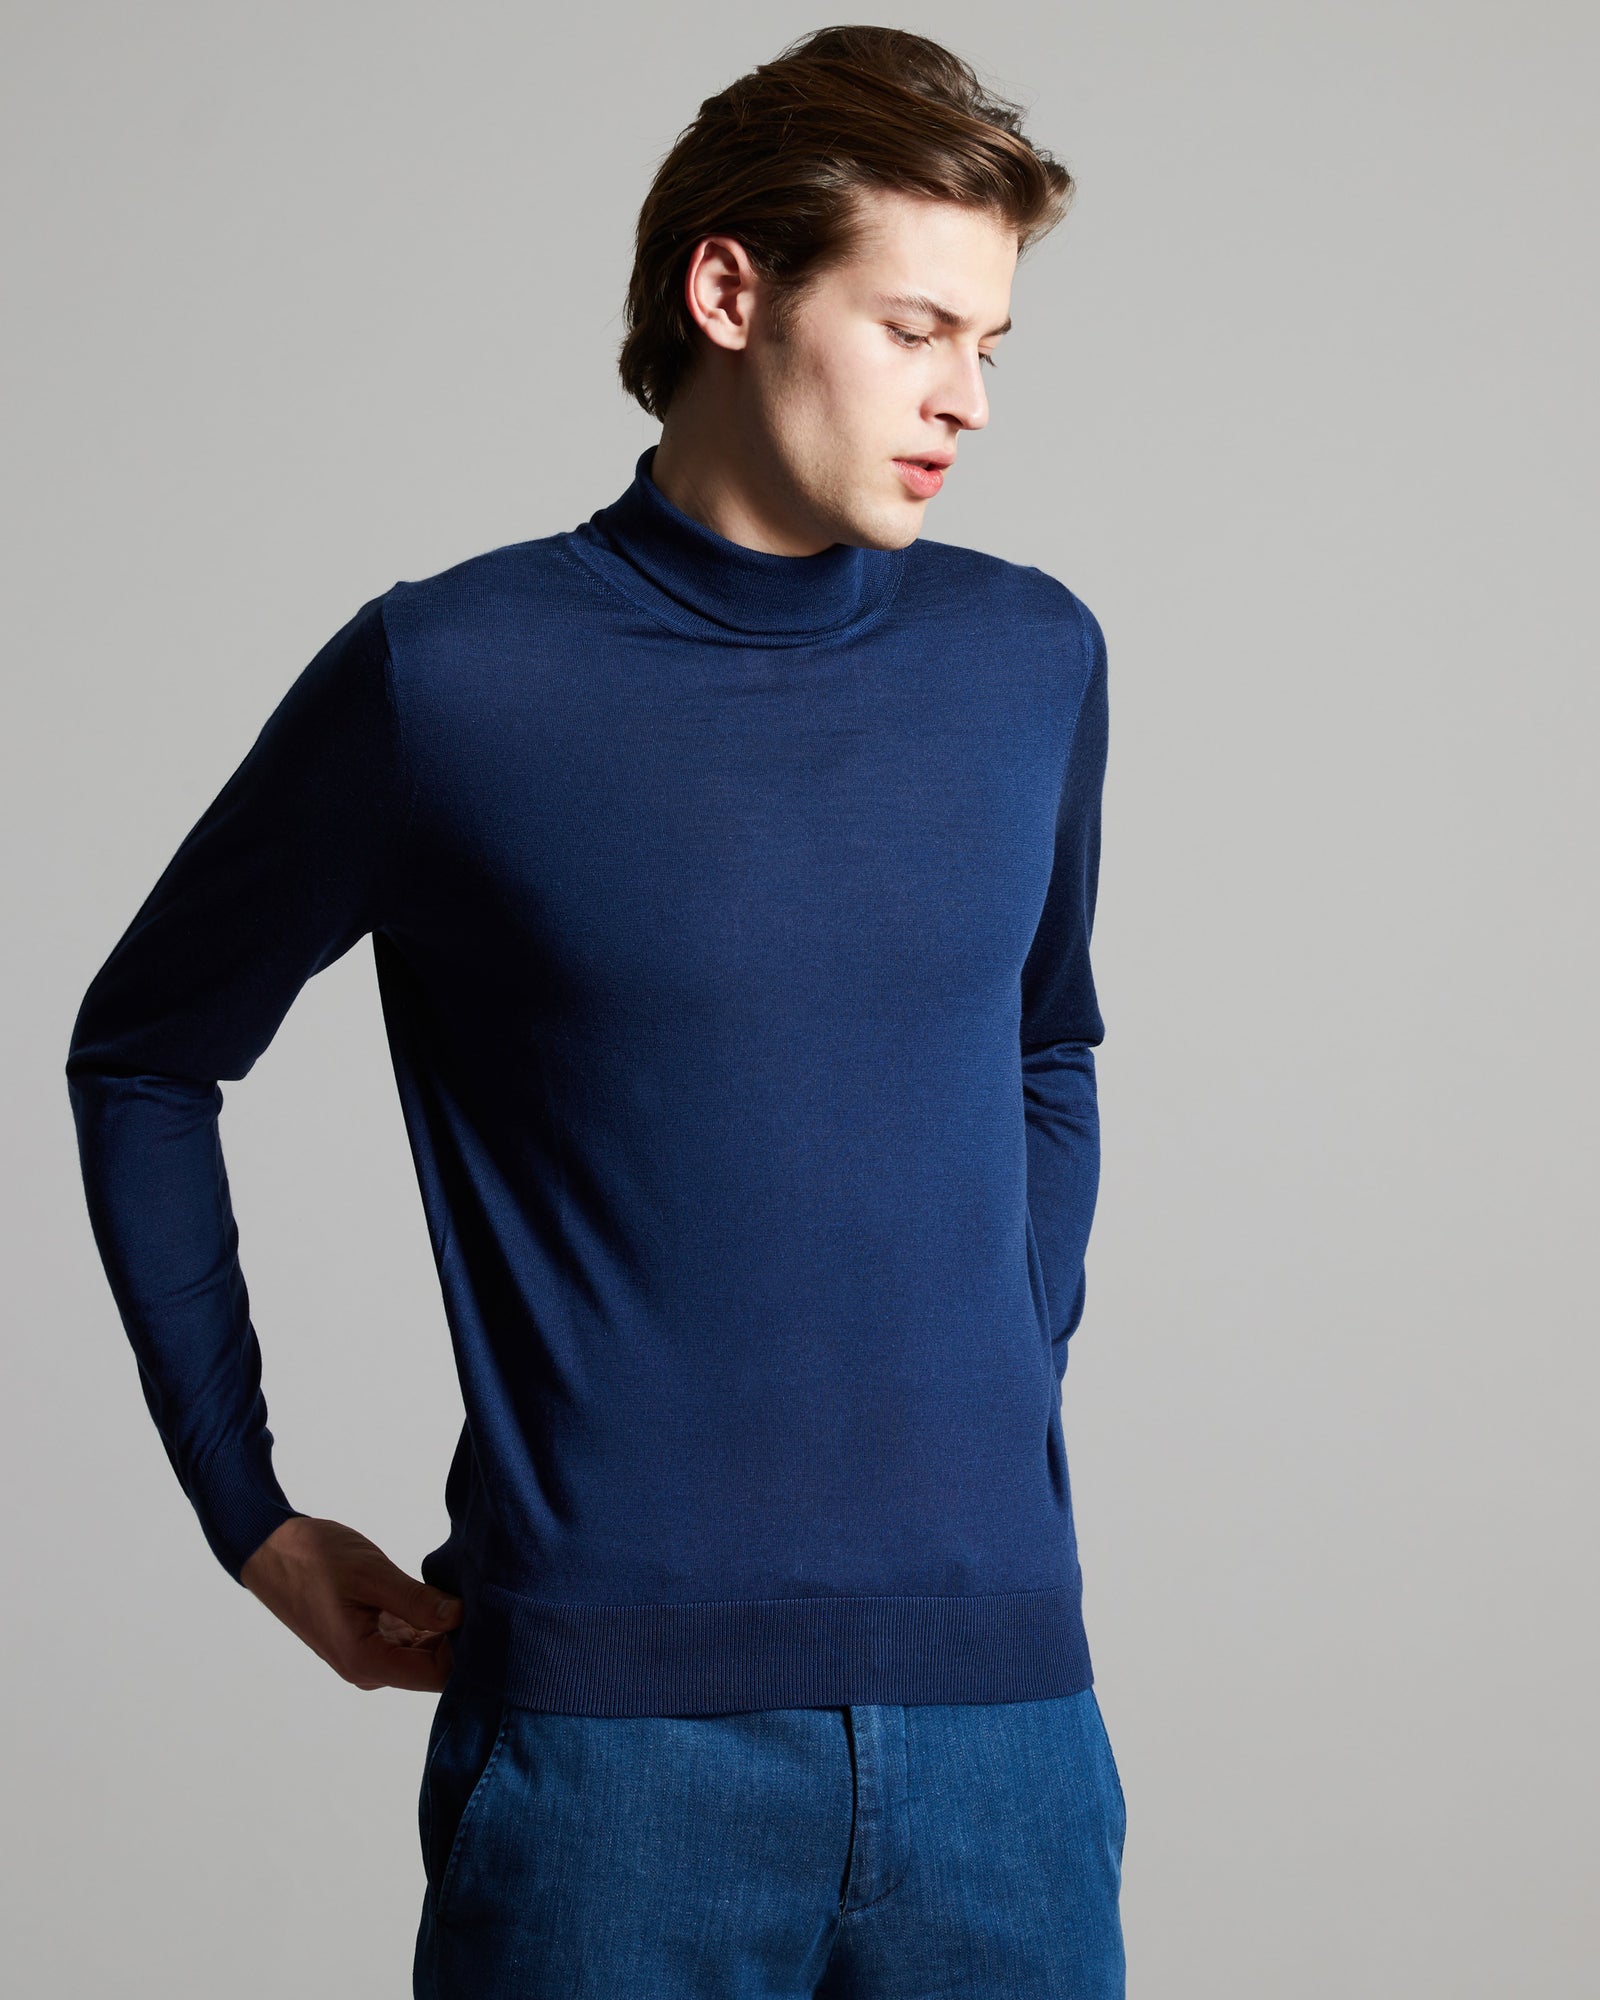 Blue cashmere and silk men's turtleneck sweater